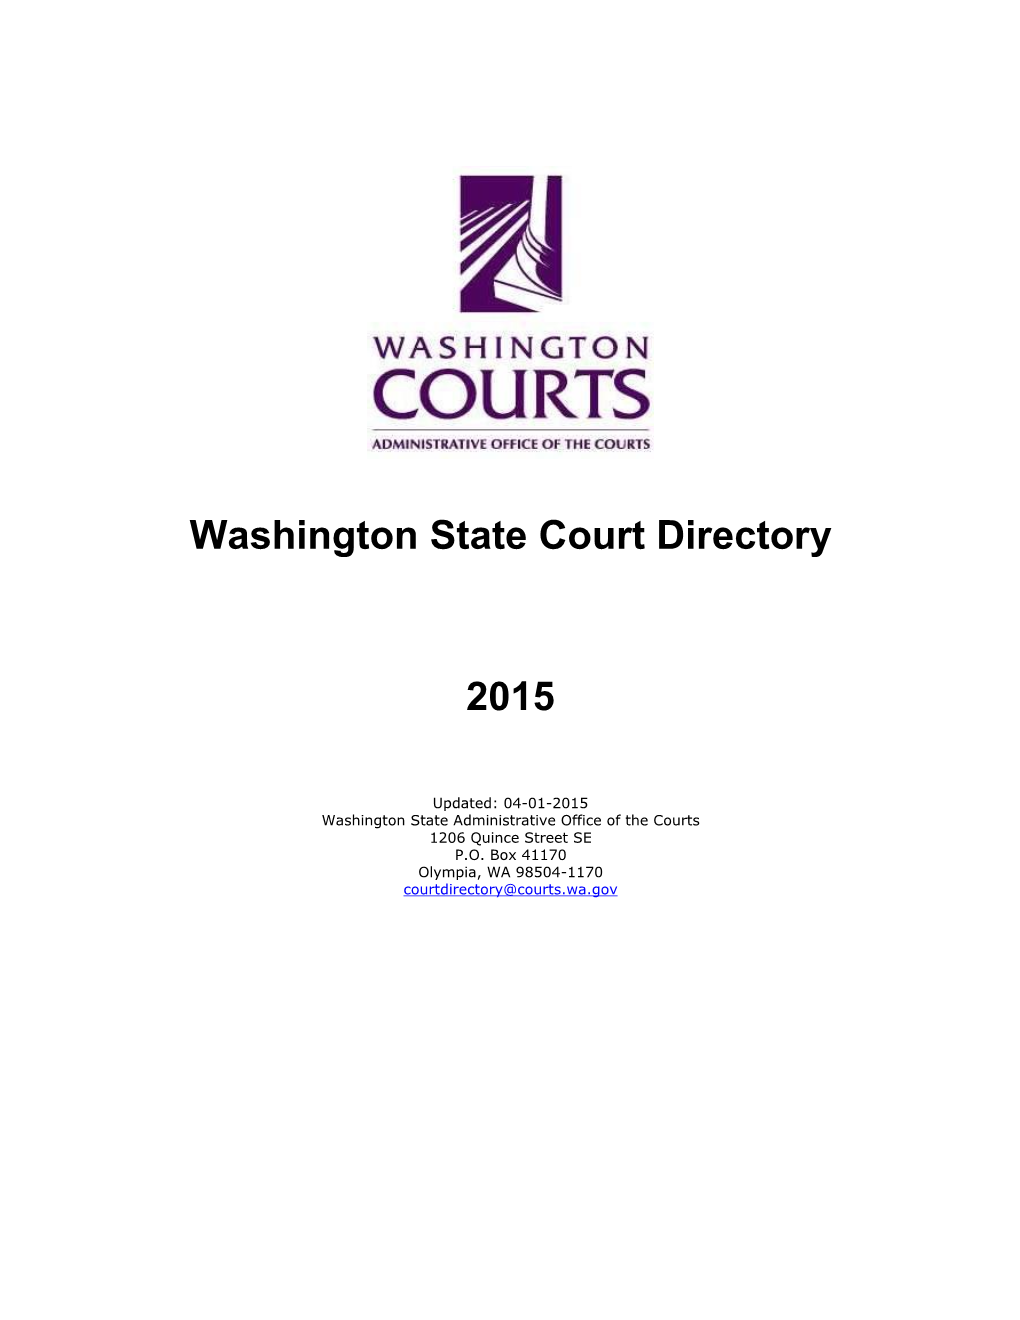 Washington State Court Directory 2015